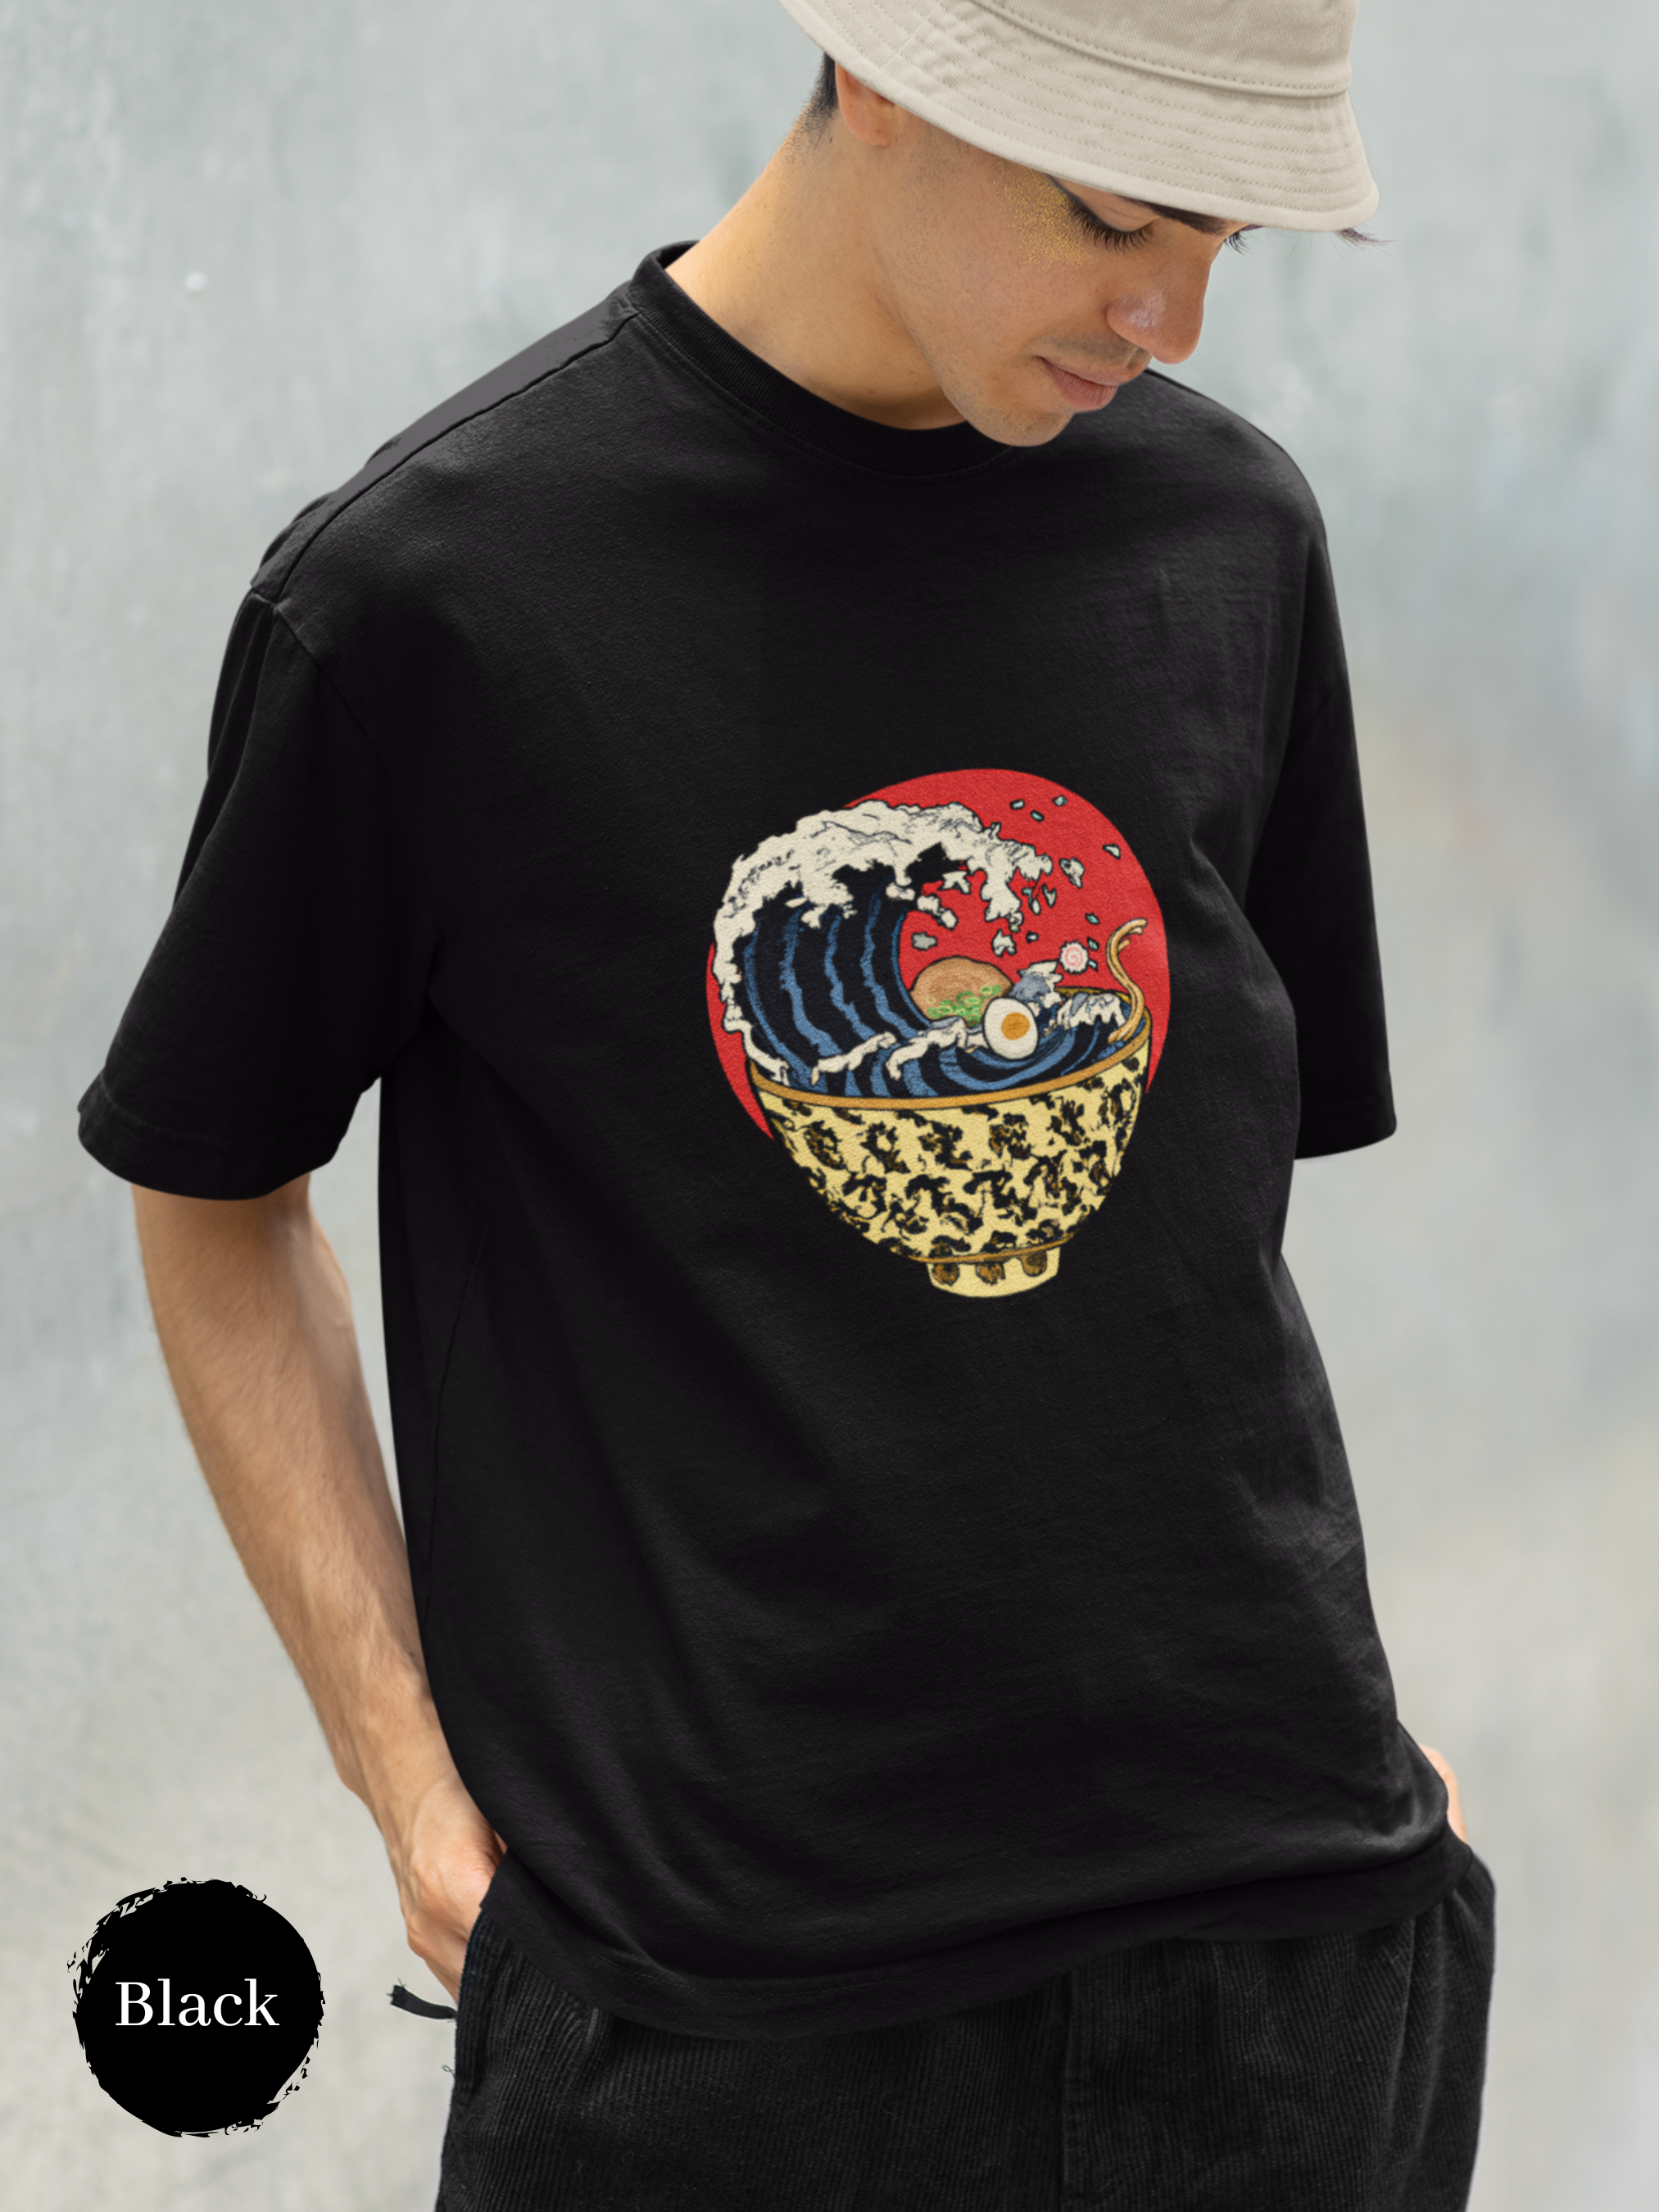 Ramen T-shirt: Hokusai Style Ramen Bowl with Wave Illustration - Japanese Foodie Shirt with Unique Ramen Art